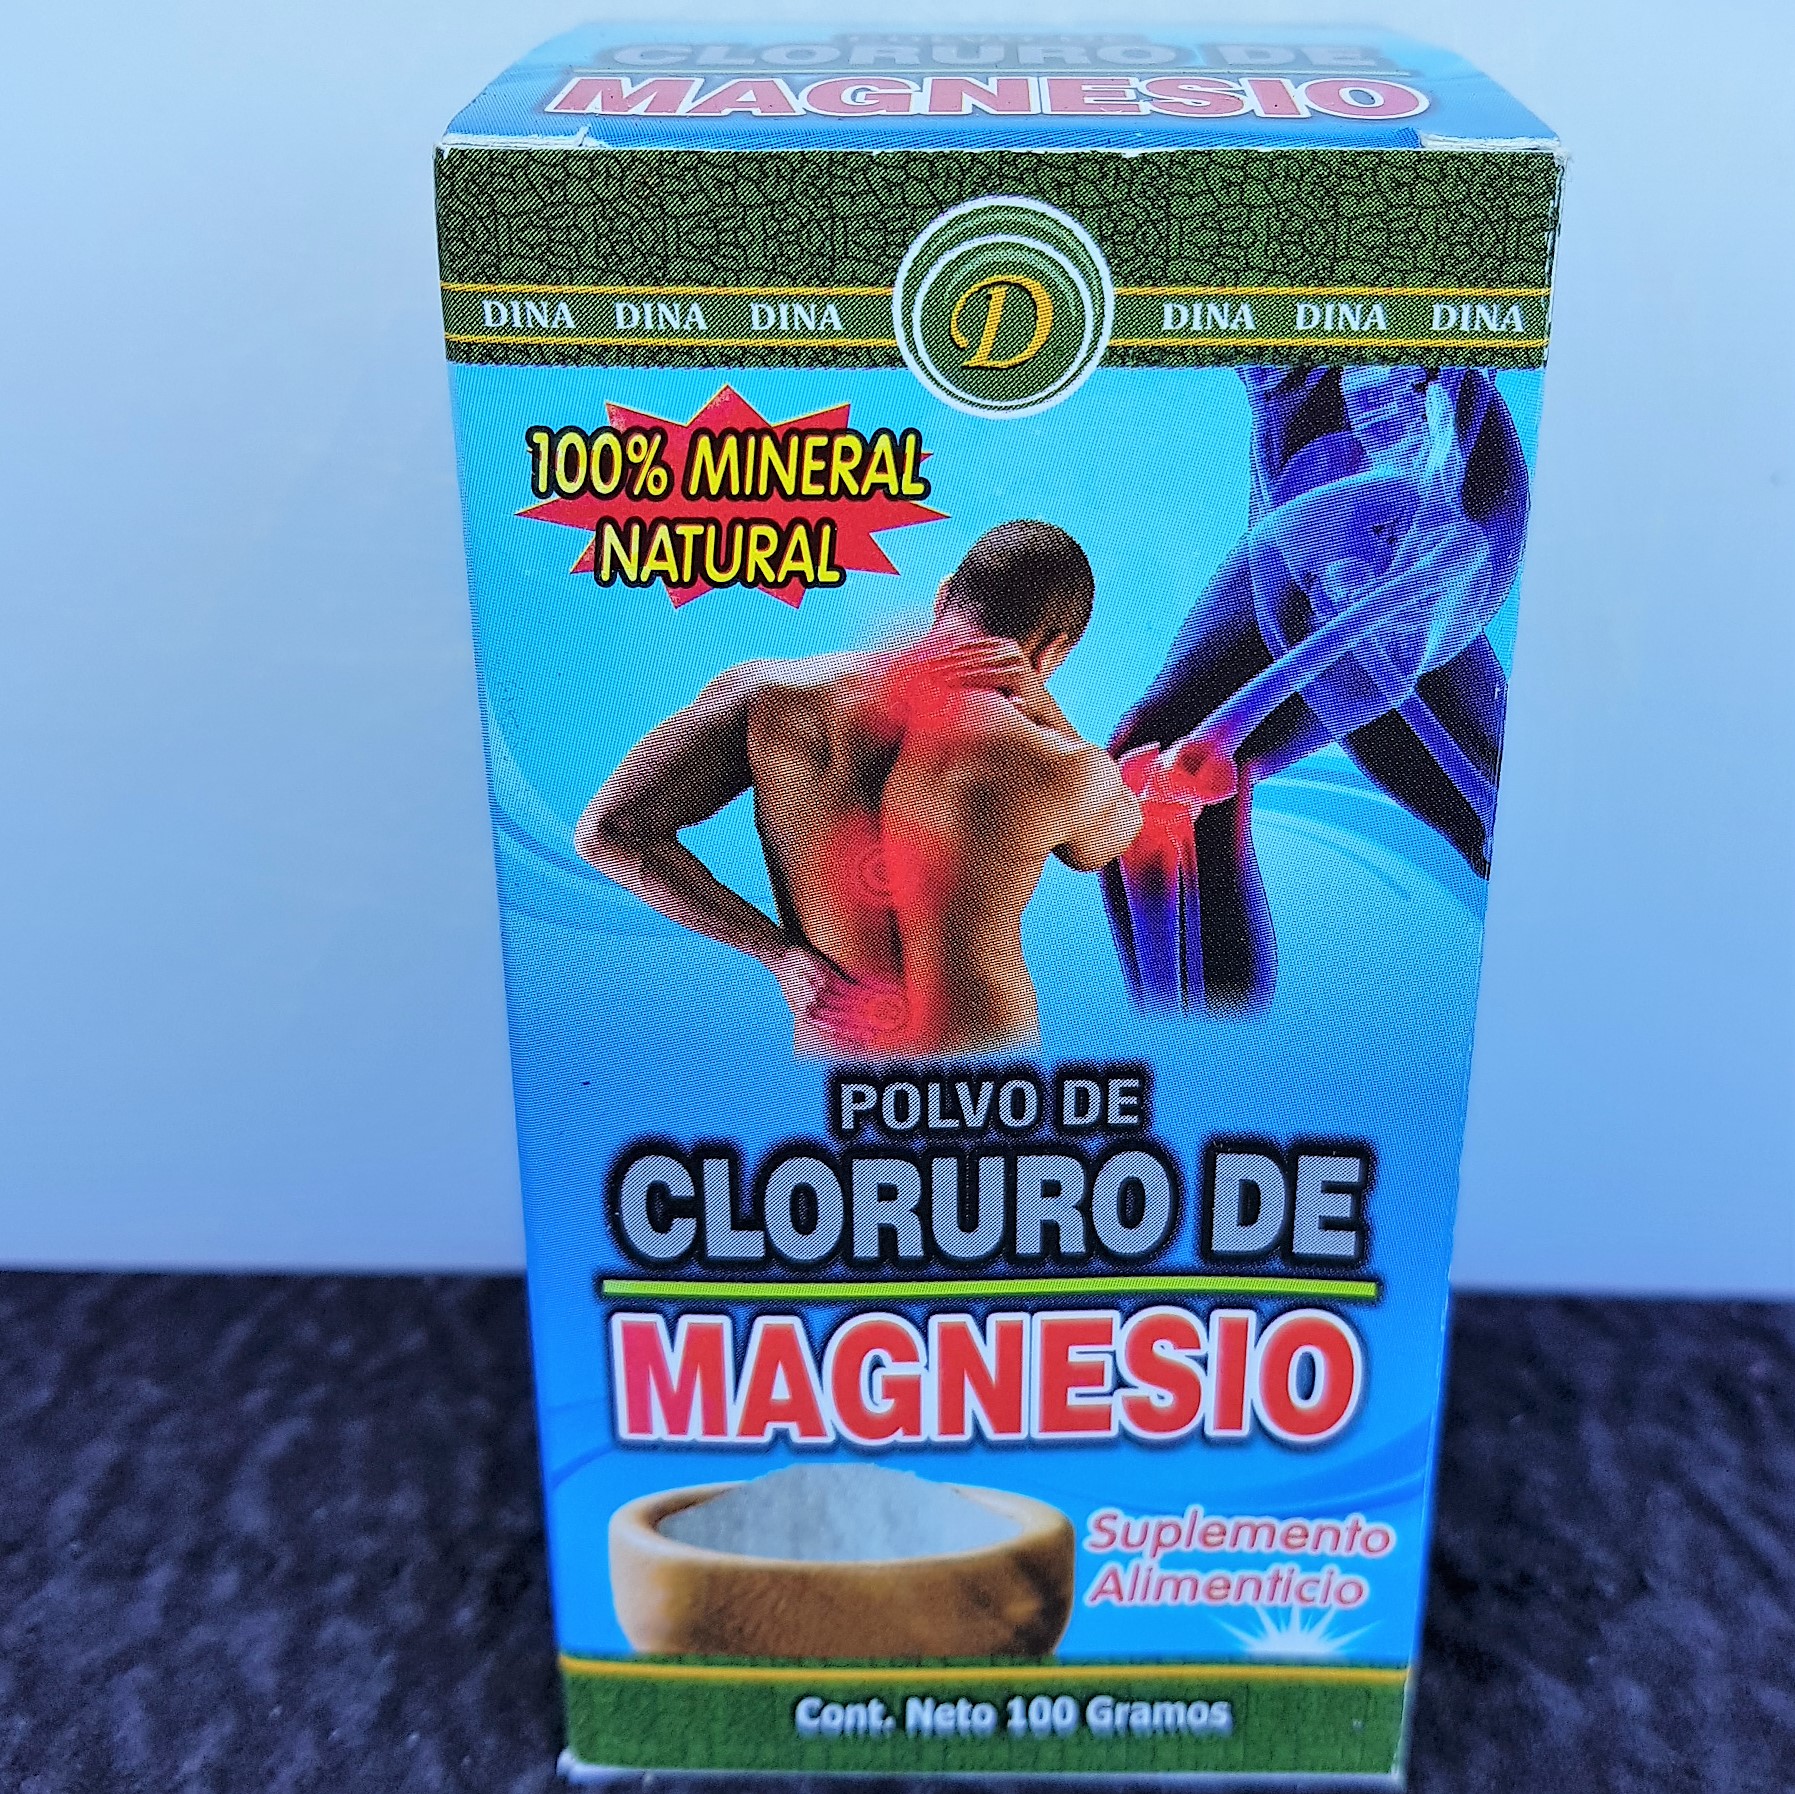 Cloruro de Magnesio en polvo : Pronamed, Productos Naturales, Ortopedia,  Belleza Natural e Insumos Médicos